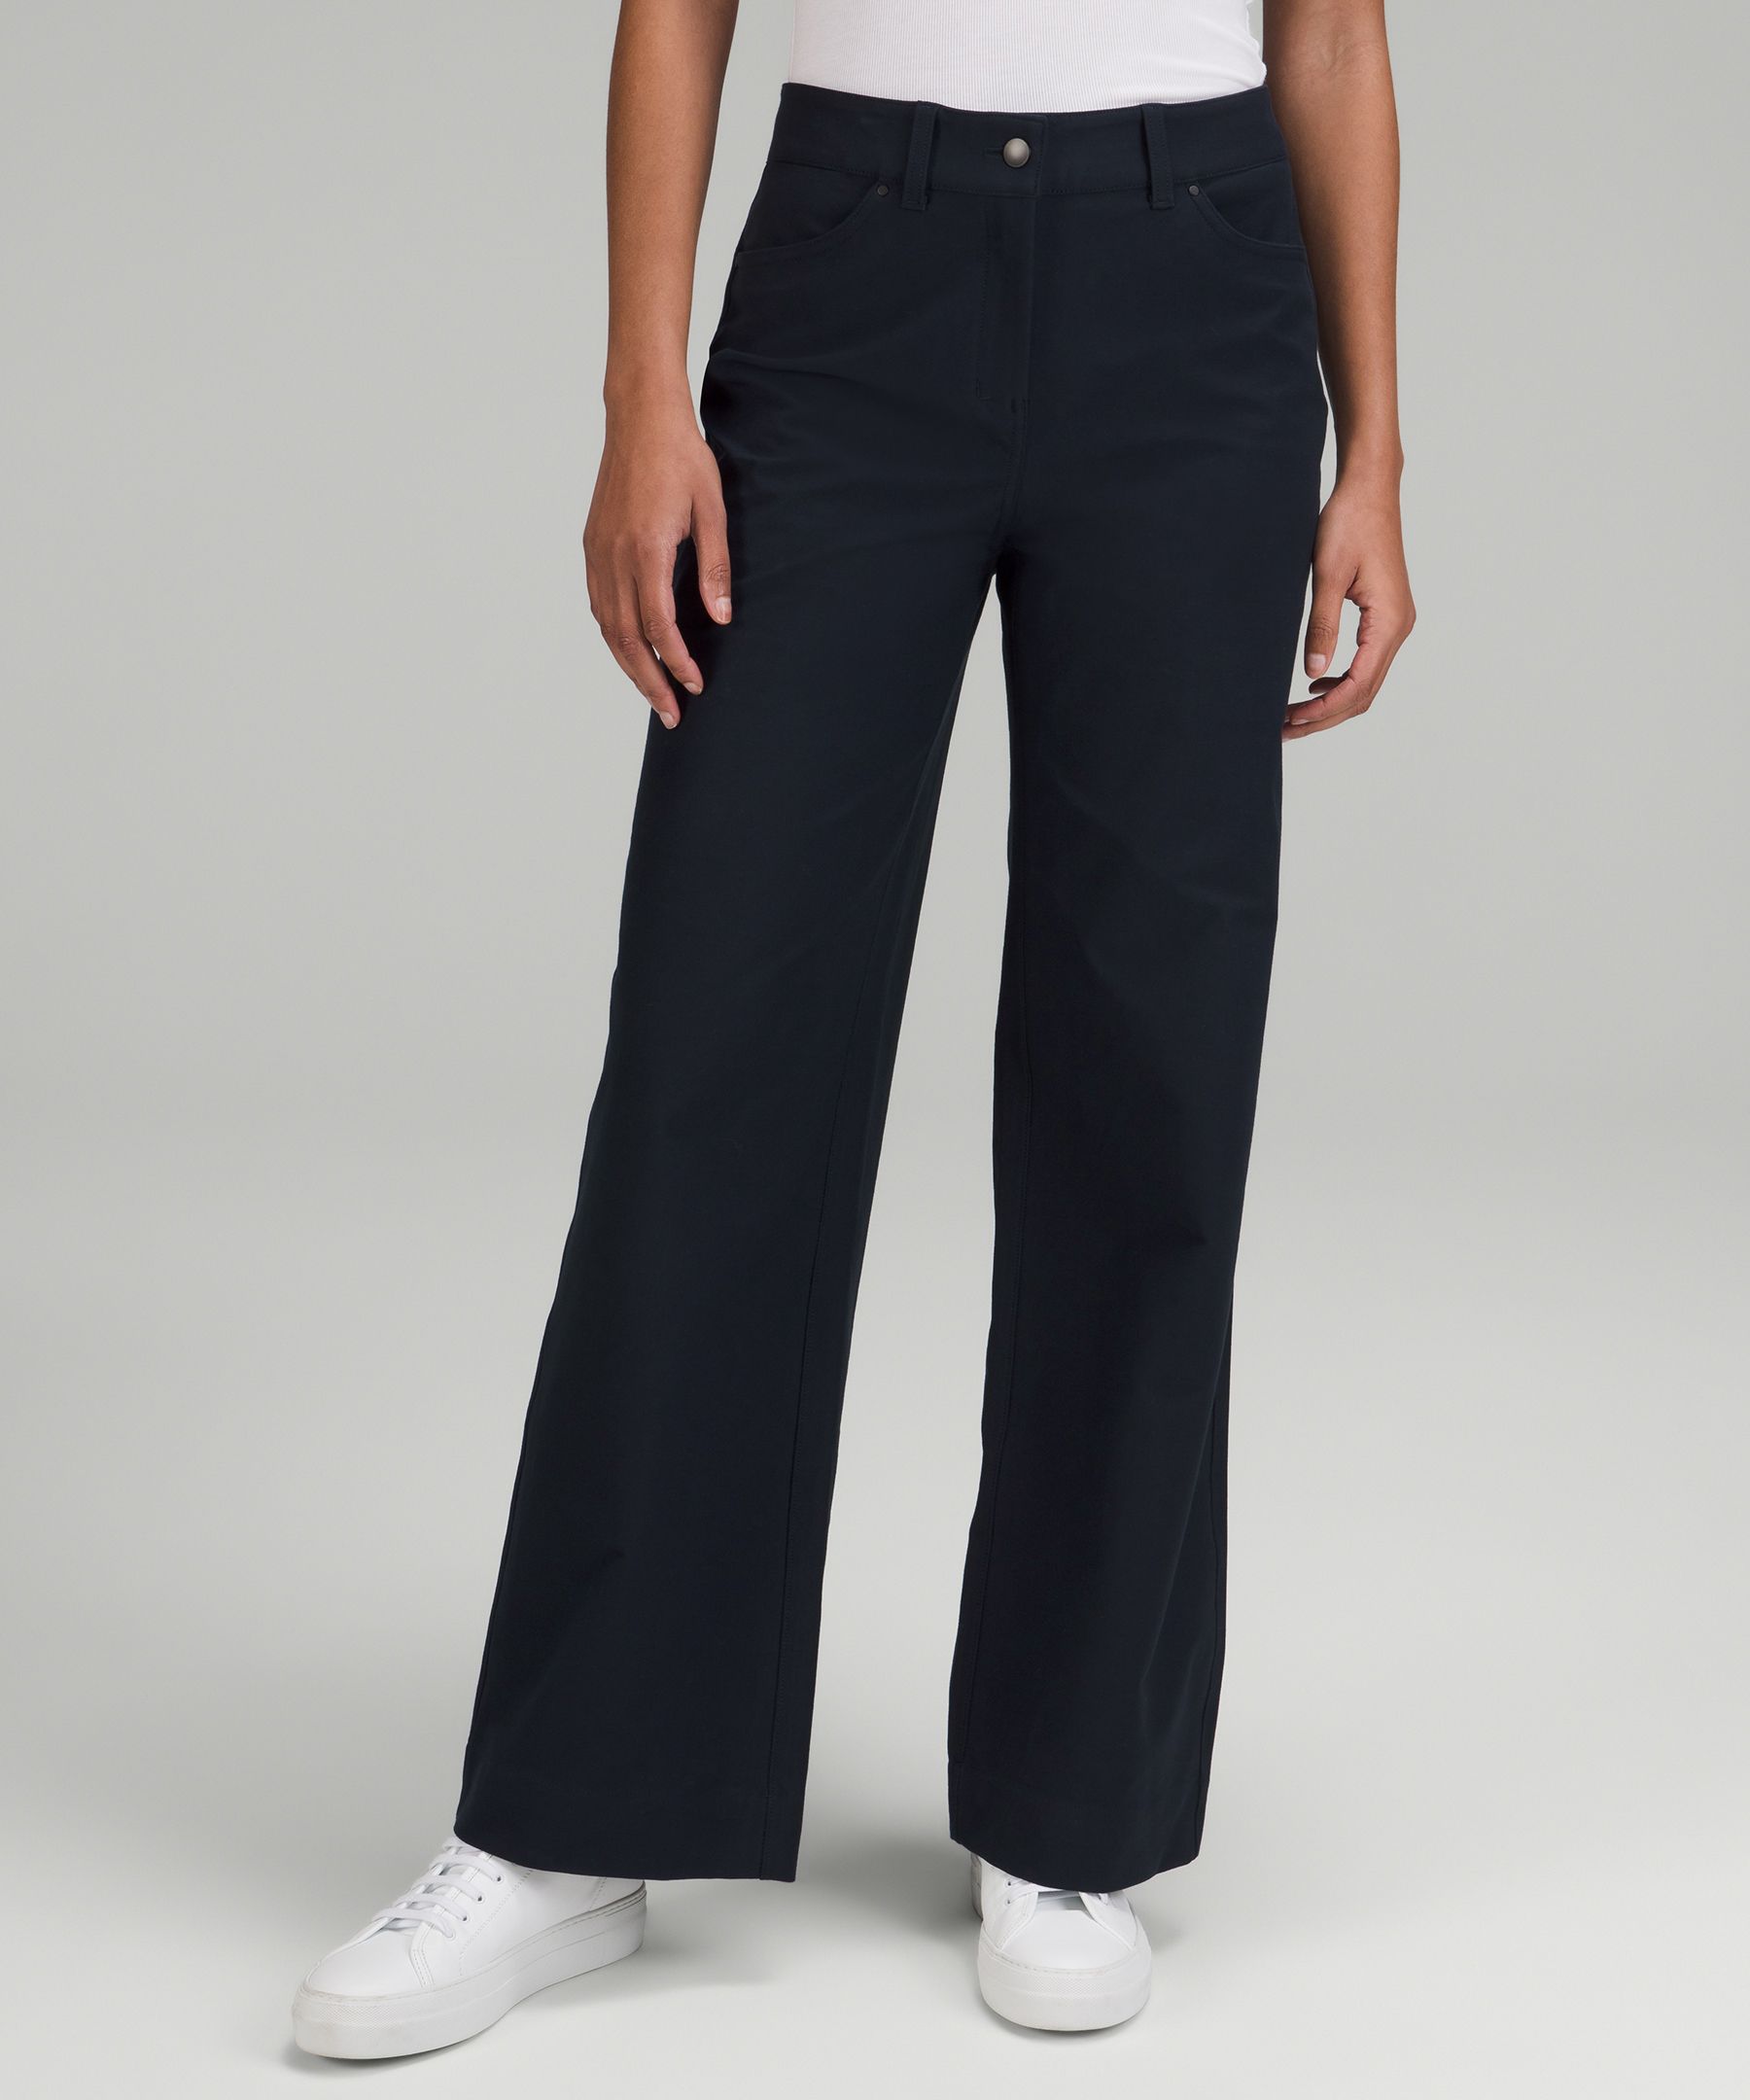 Lululemon Trouser Women’s Versatile Pants Size 6 Black